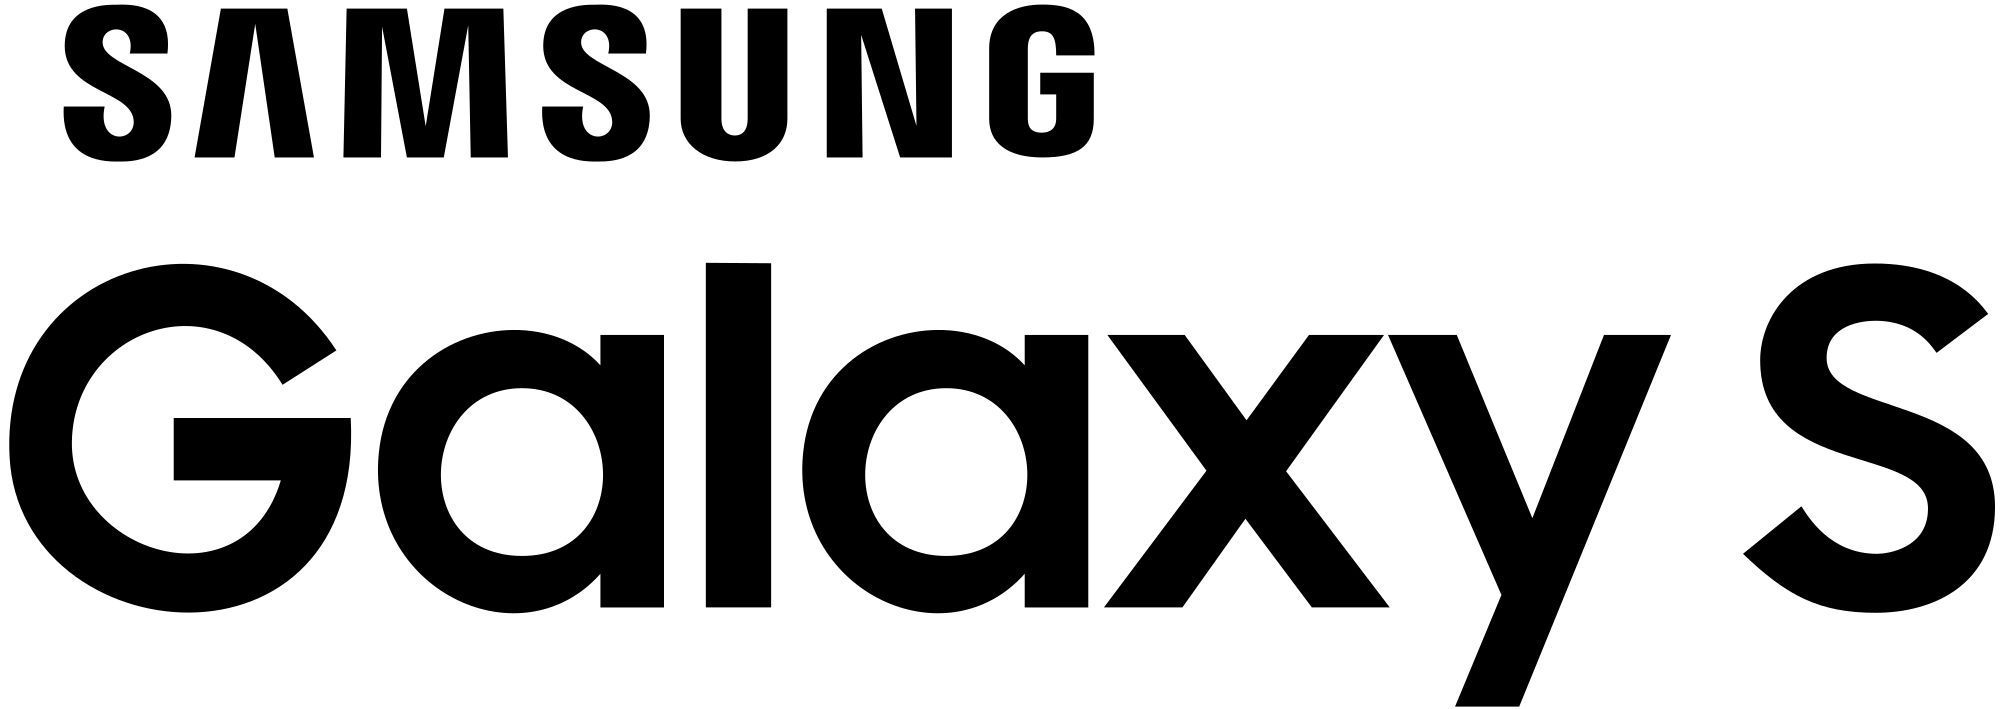 Samsung Galaxy S5 Logo - File:Samsung Galaxy S new logo.svg - Wikimedia Commons